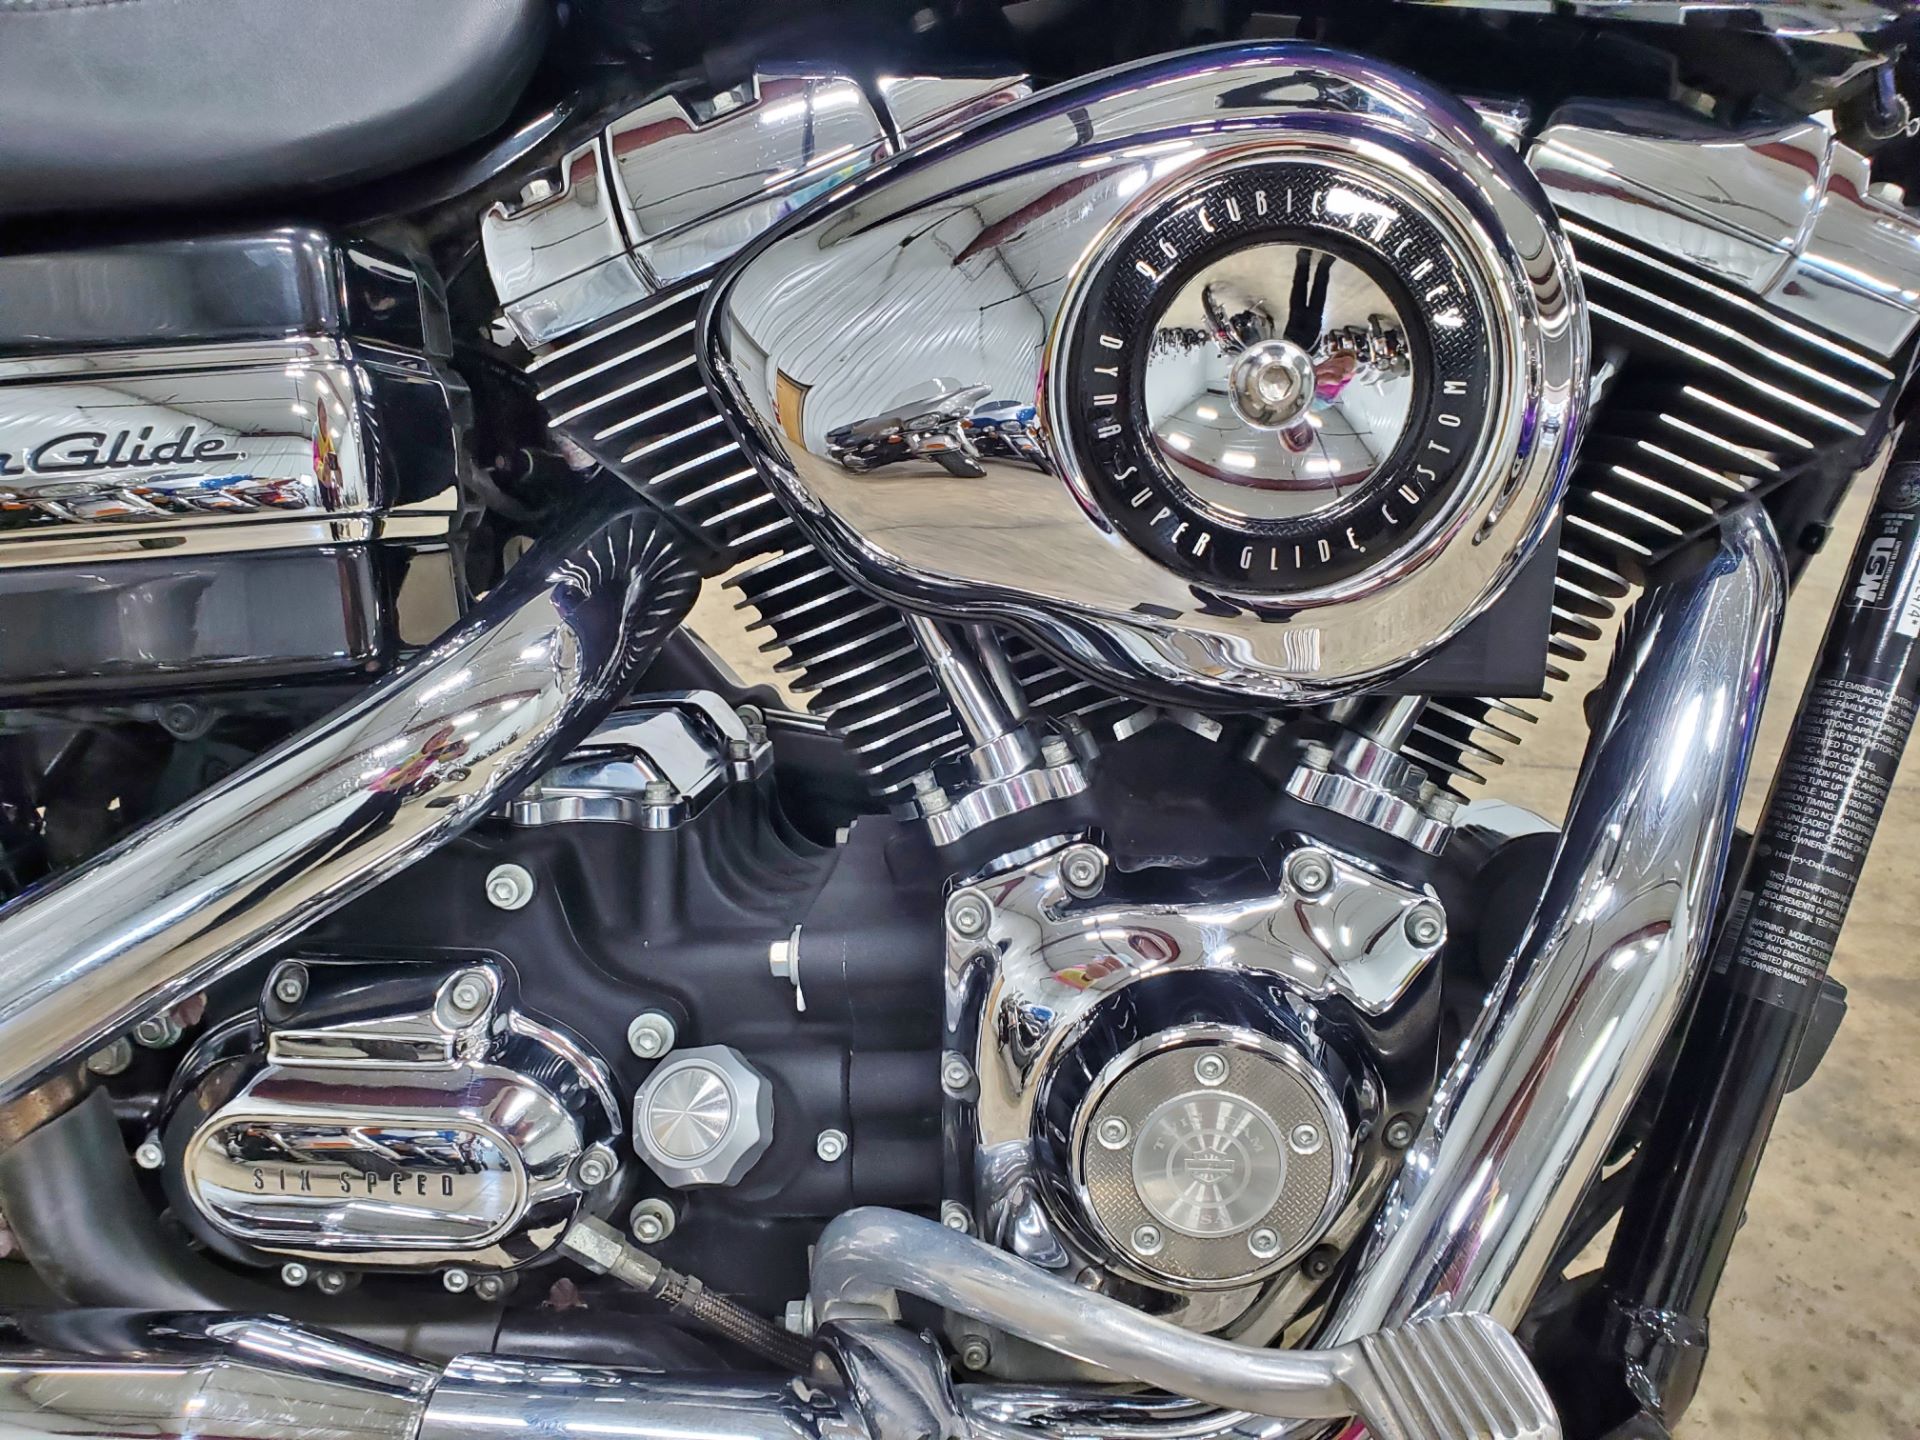 2010 Harley-Davidson Dyna® Super Glide® Custom in Sandusky, Ohio - Photo 2